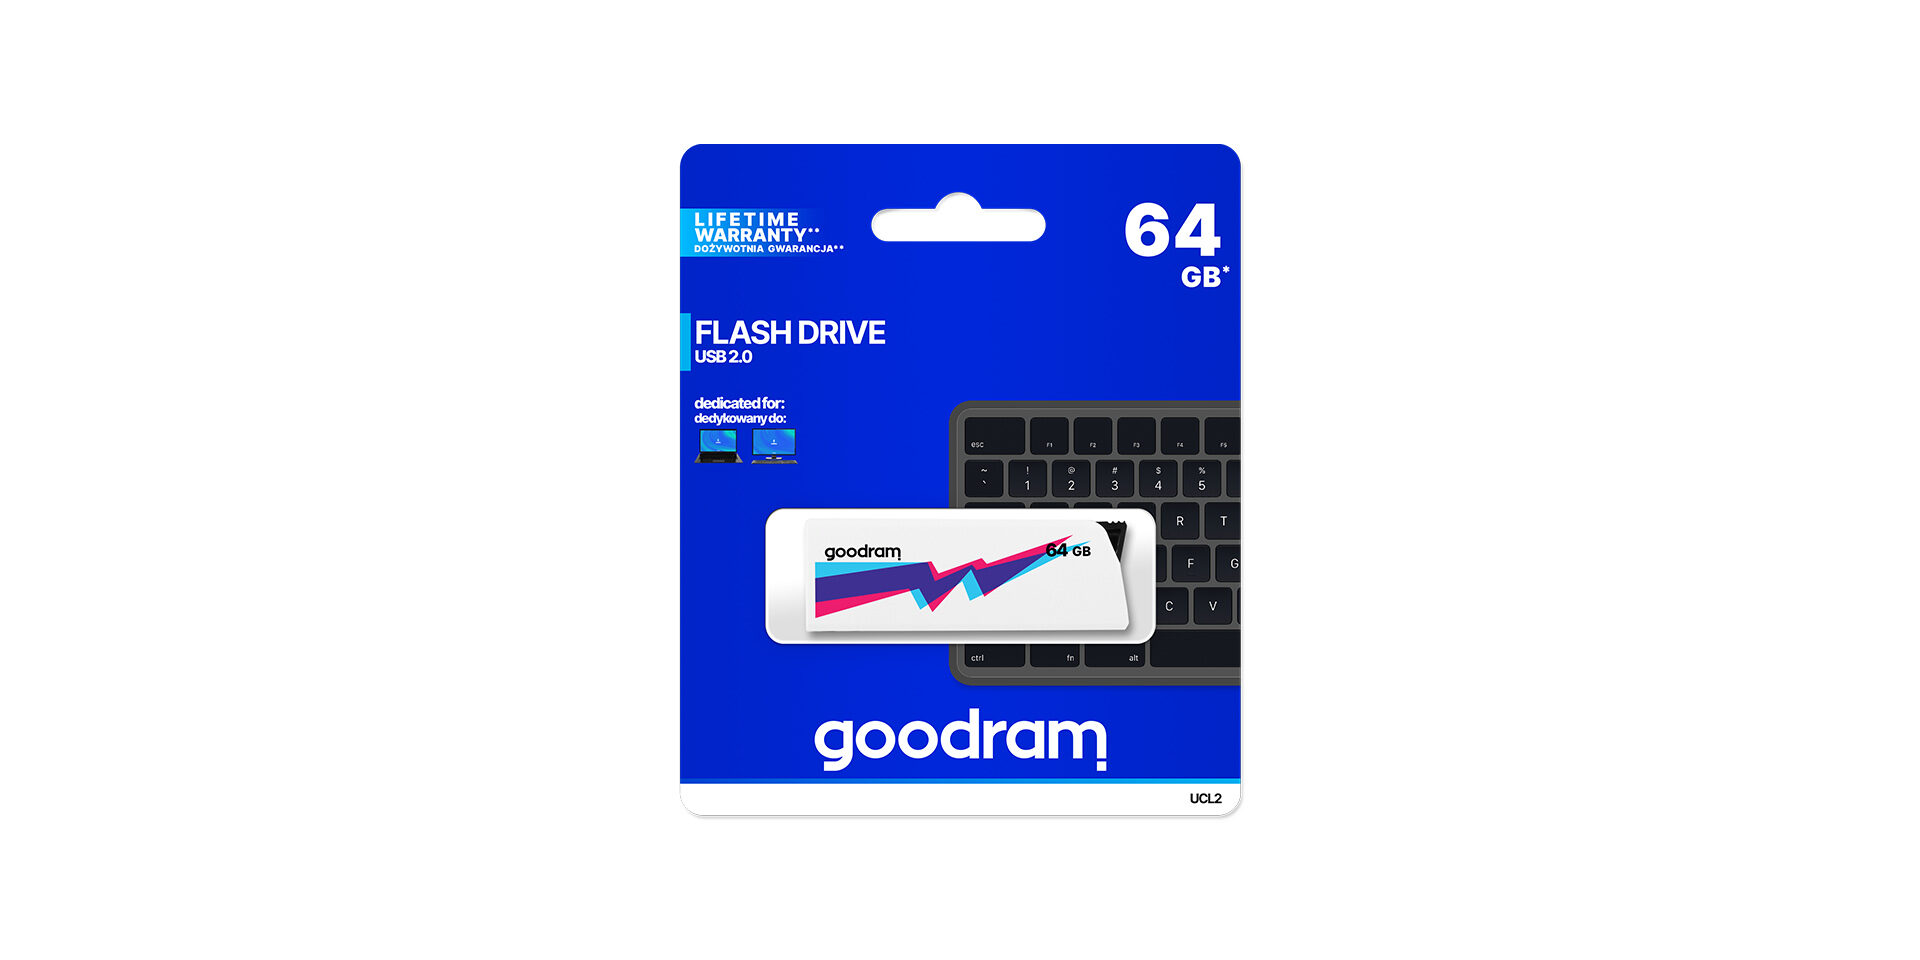 USB UCL2 marki Goodram w opakowaniu